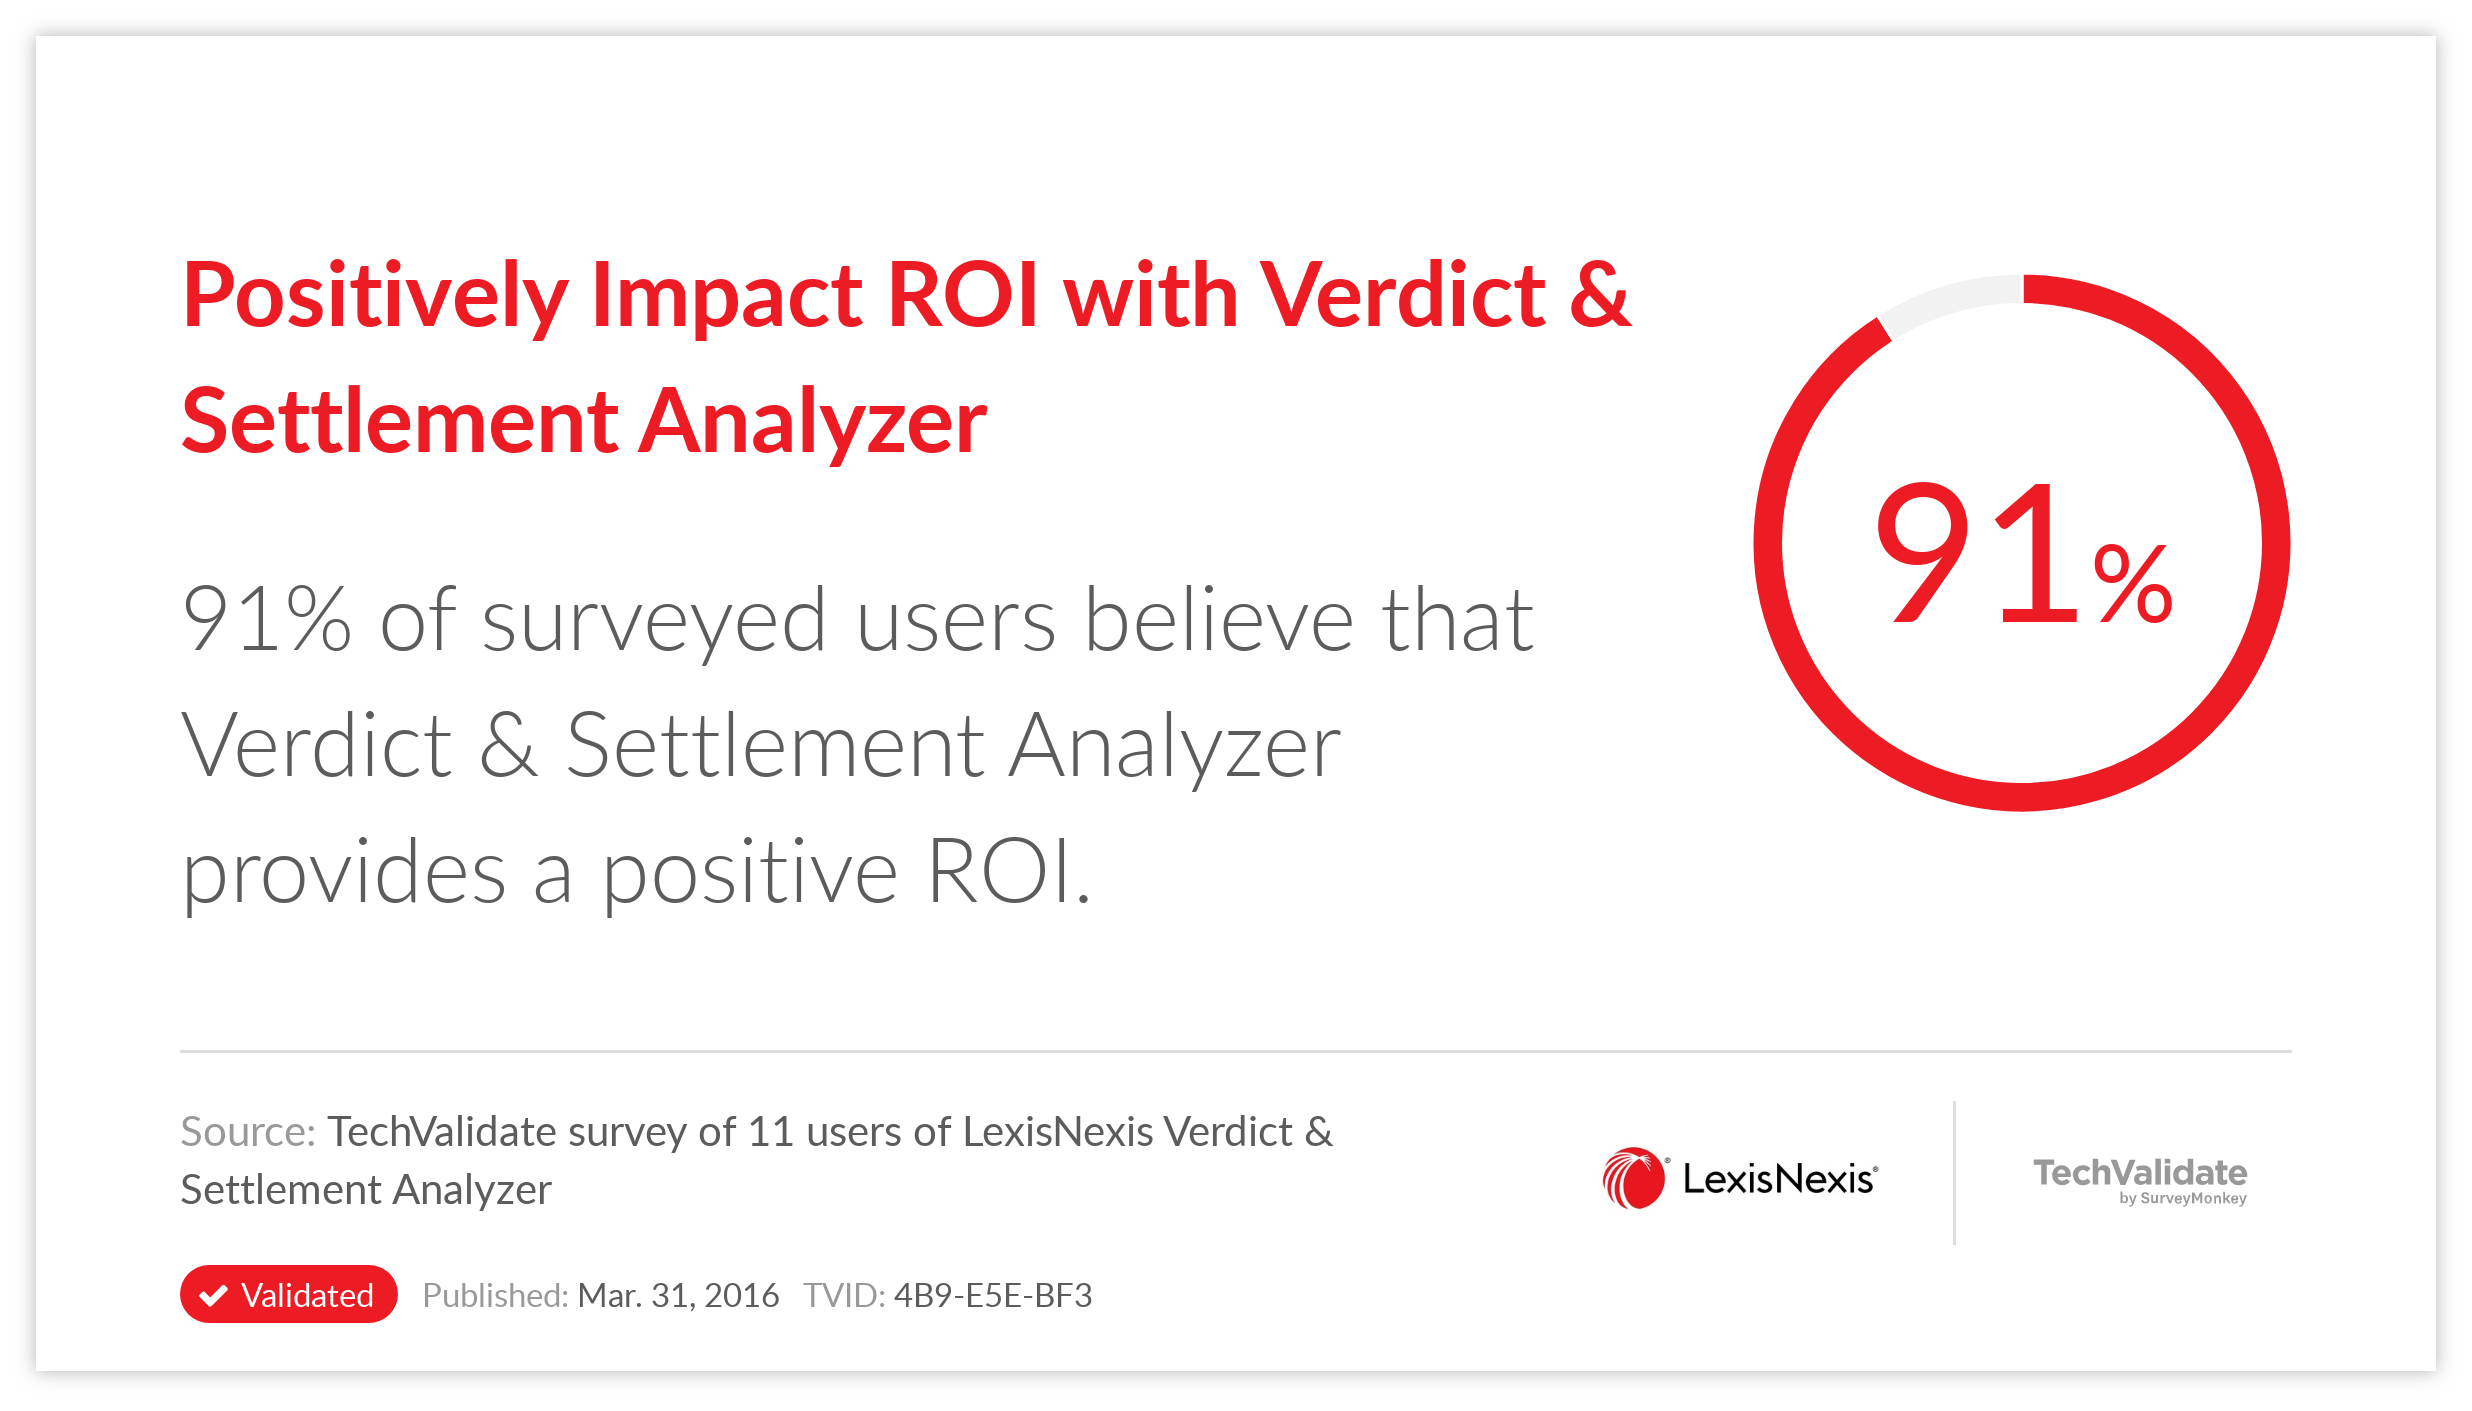 Positively Impact ROI with Verdict & Settlement Analyzer